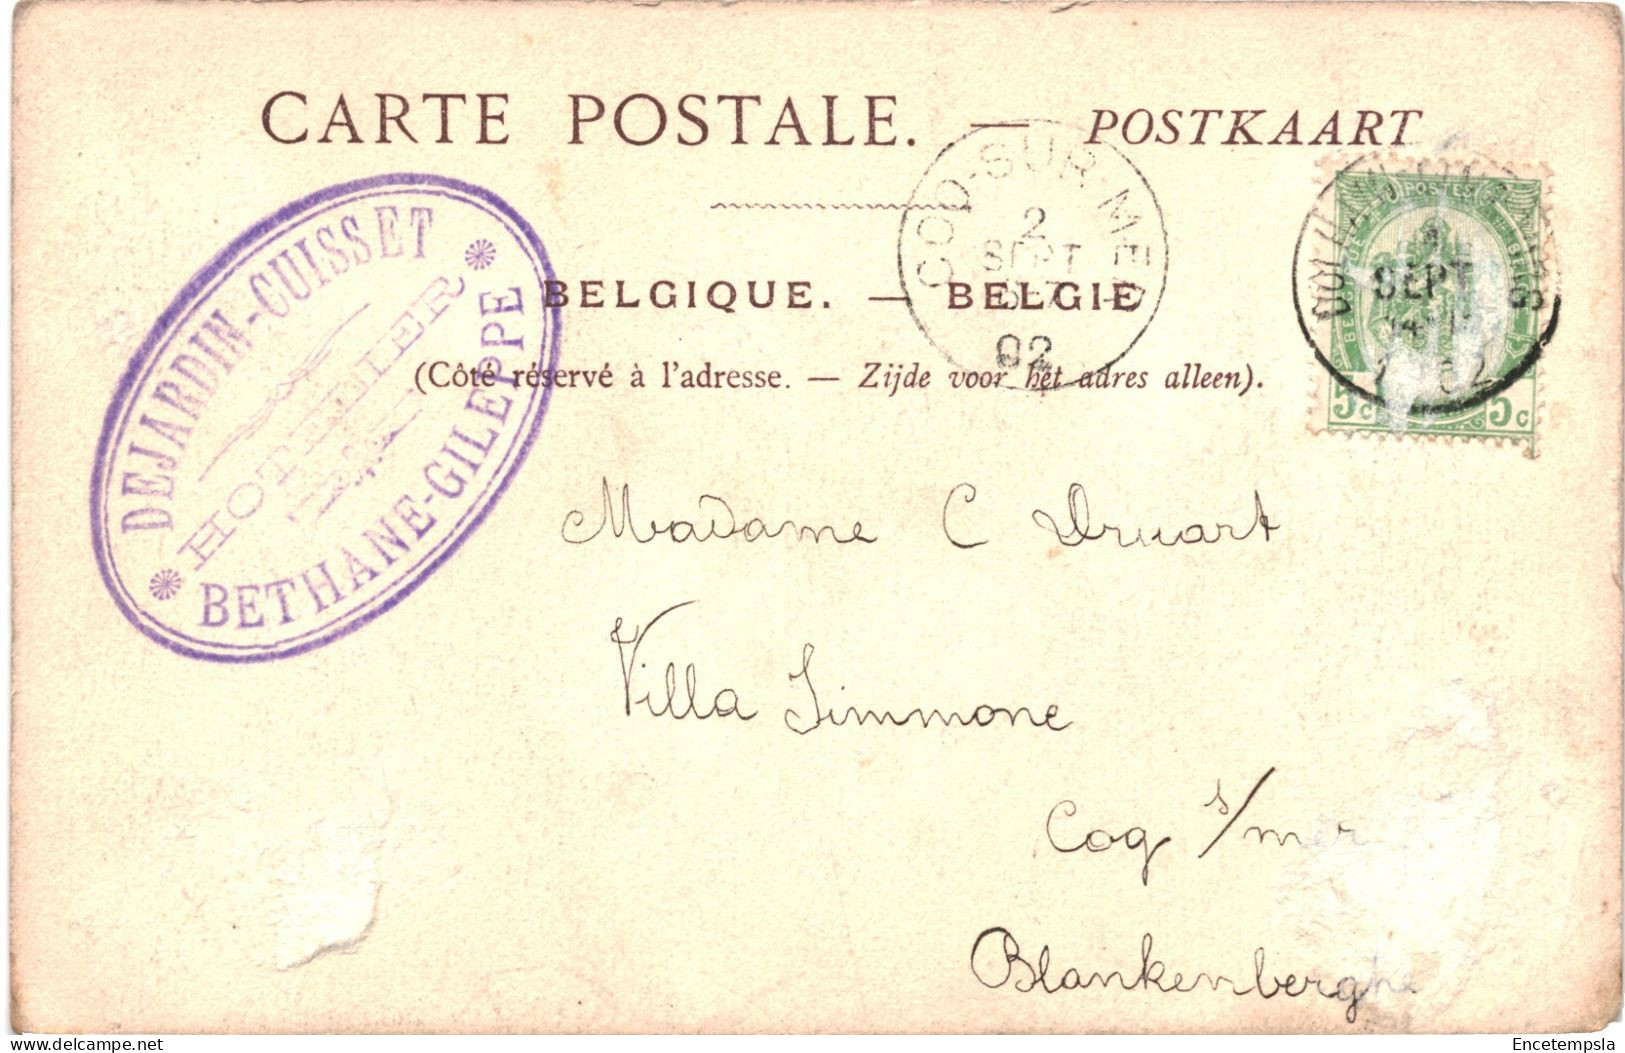 CPA Carte Postale  Belgique Barrage De La Gileppe 1902  VM78808 - Gileppe (Dam)